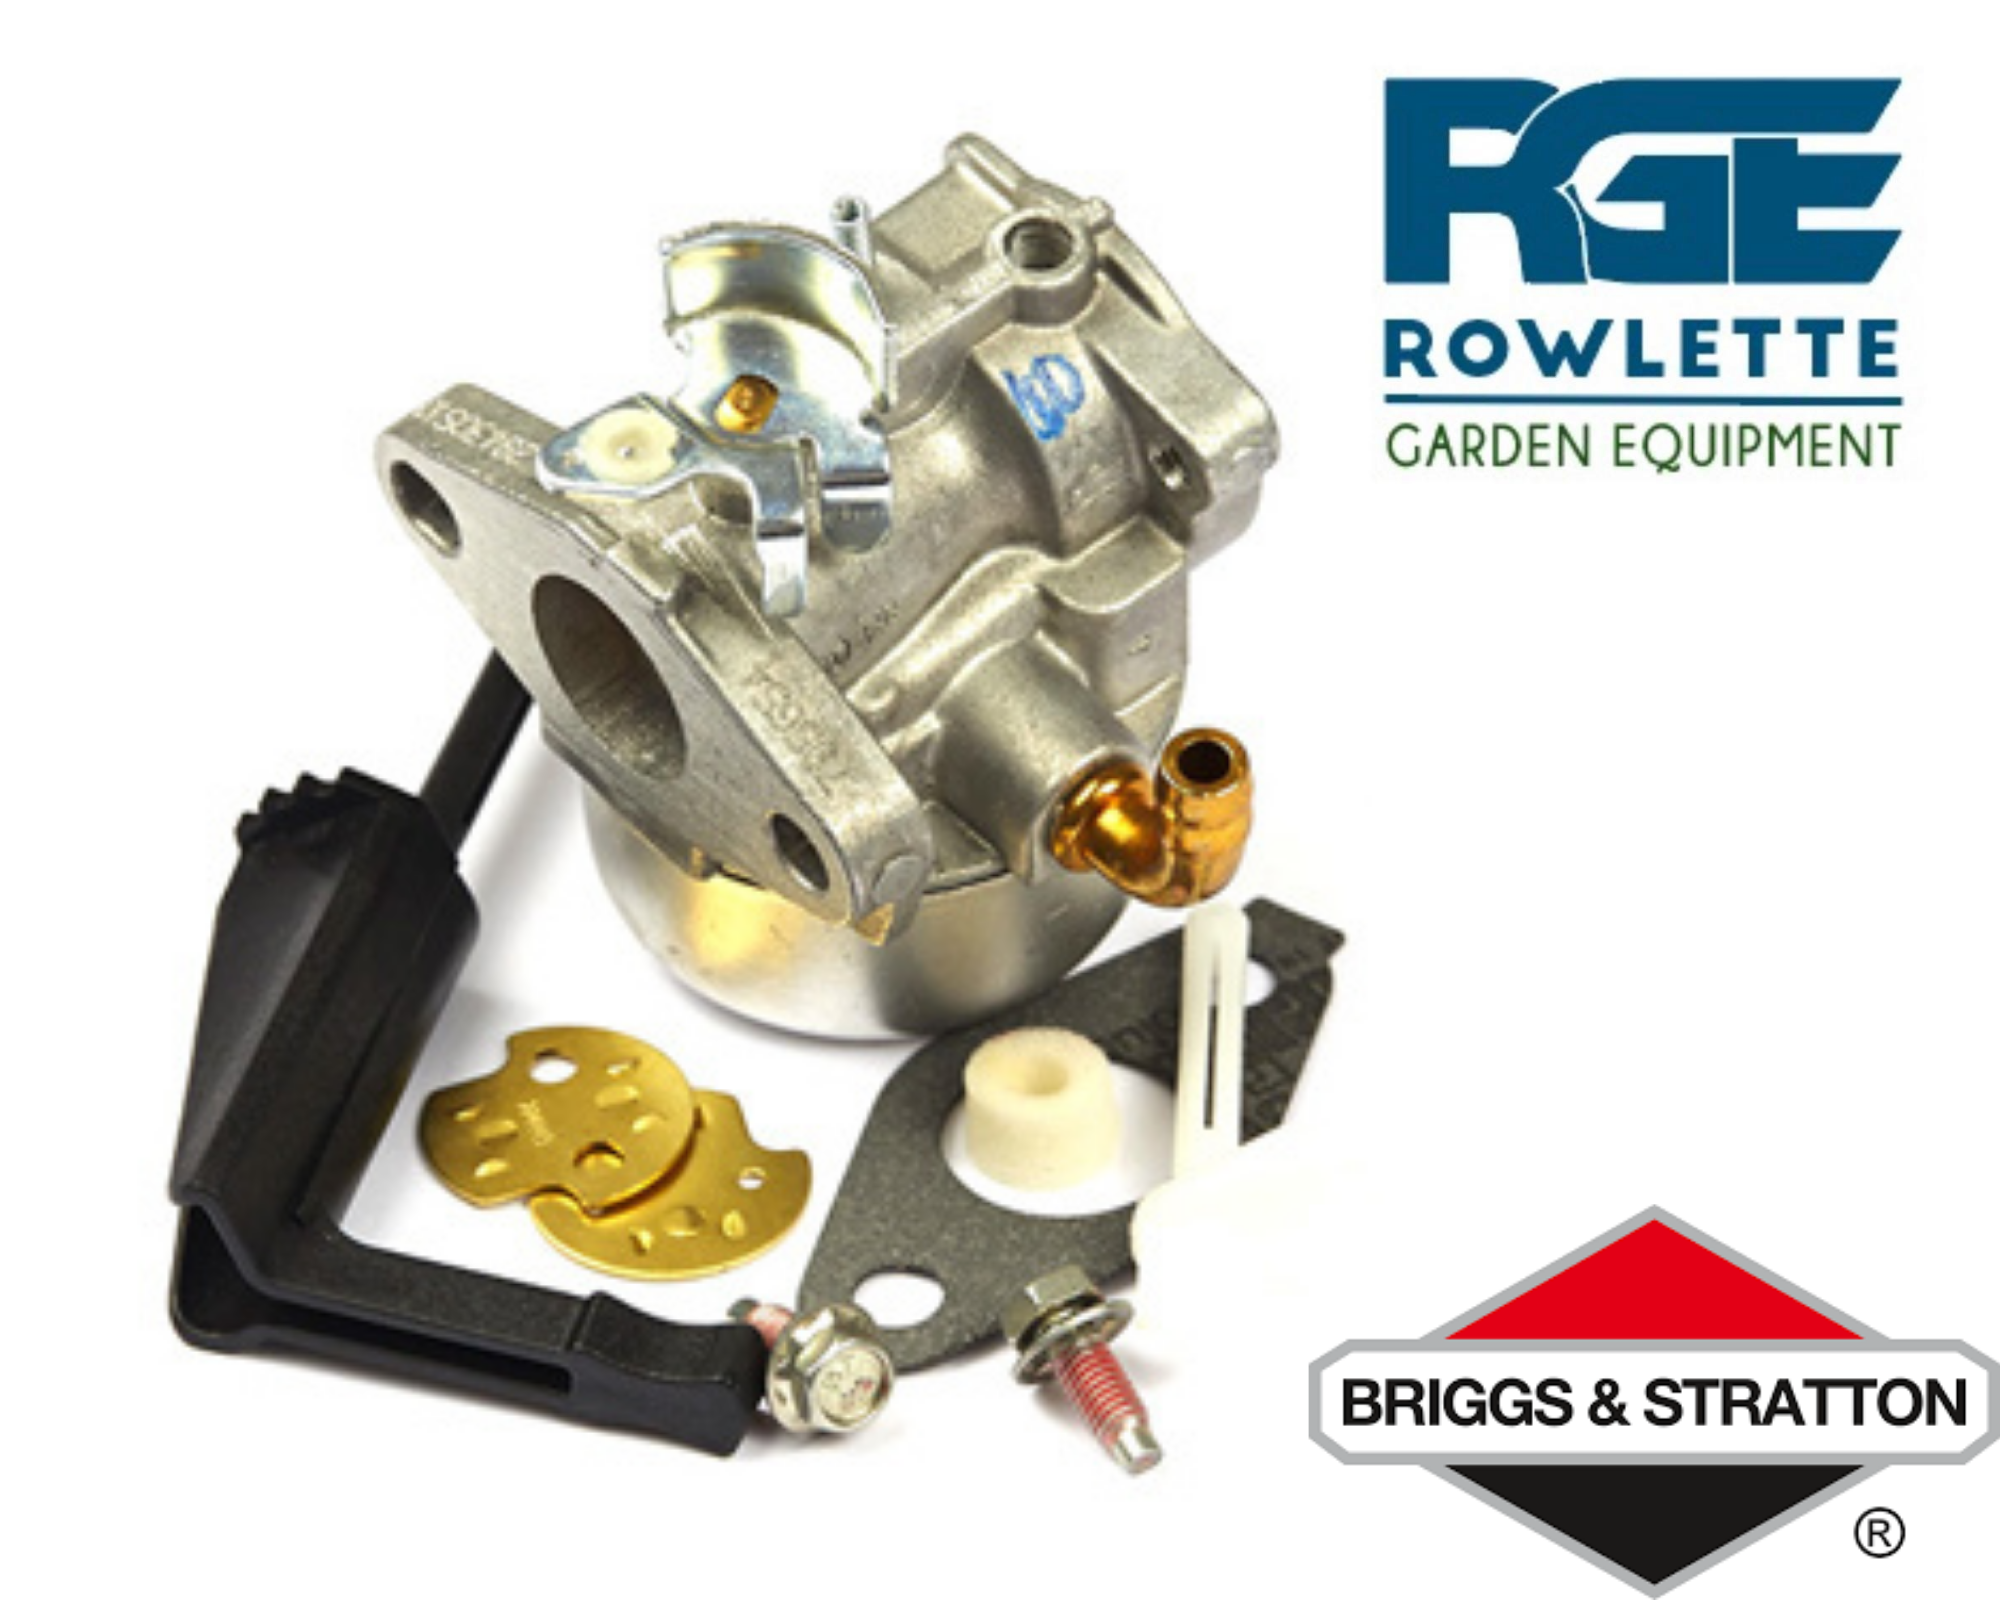 Briggs & Stratton 800 series 5 - 5.5 Hp Horizontal Engines Carburetor